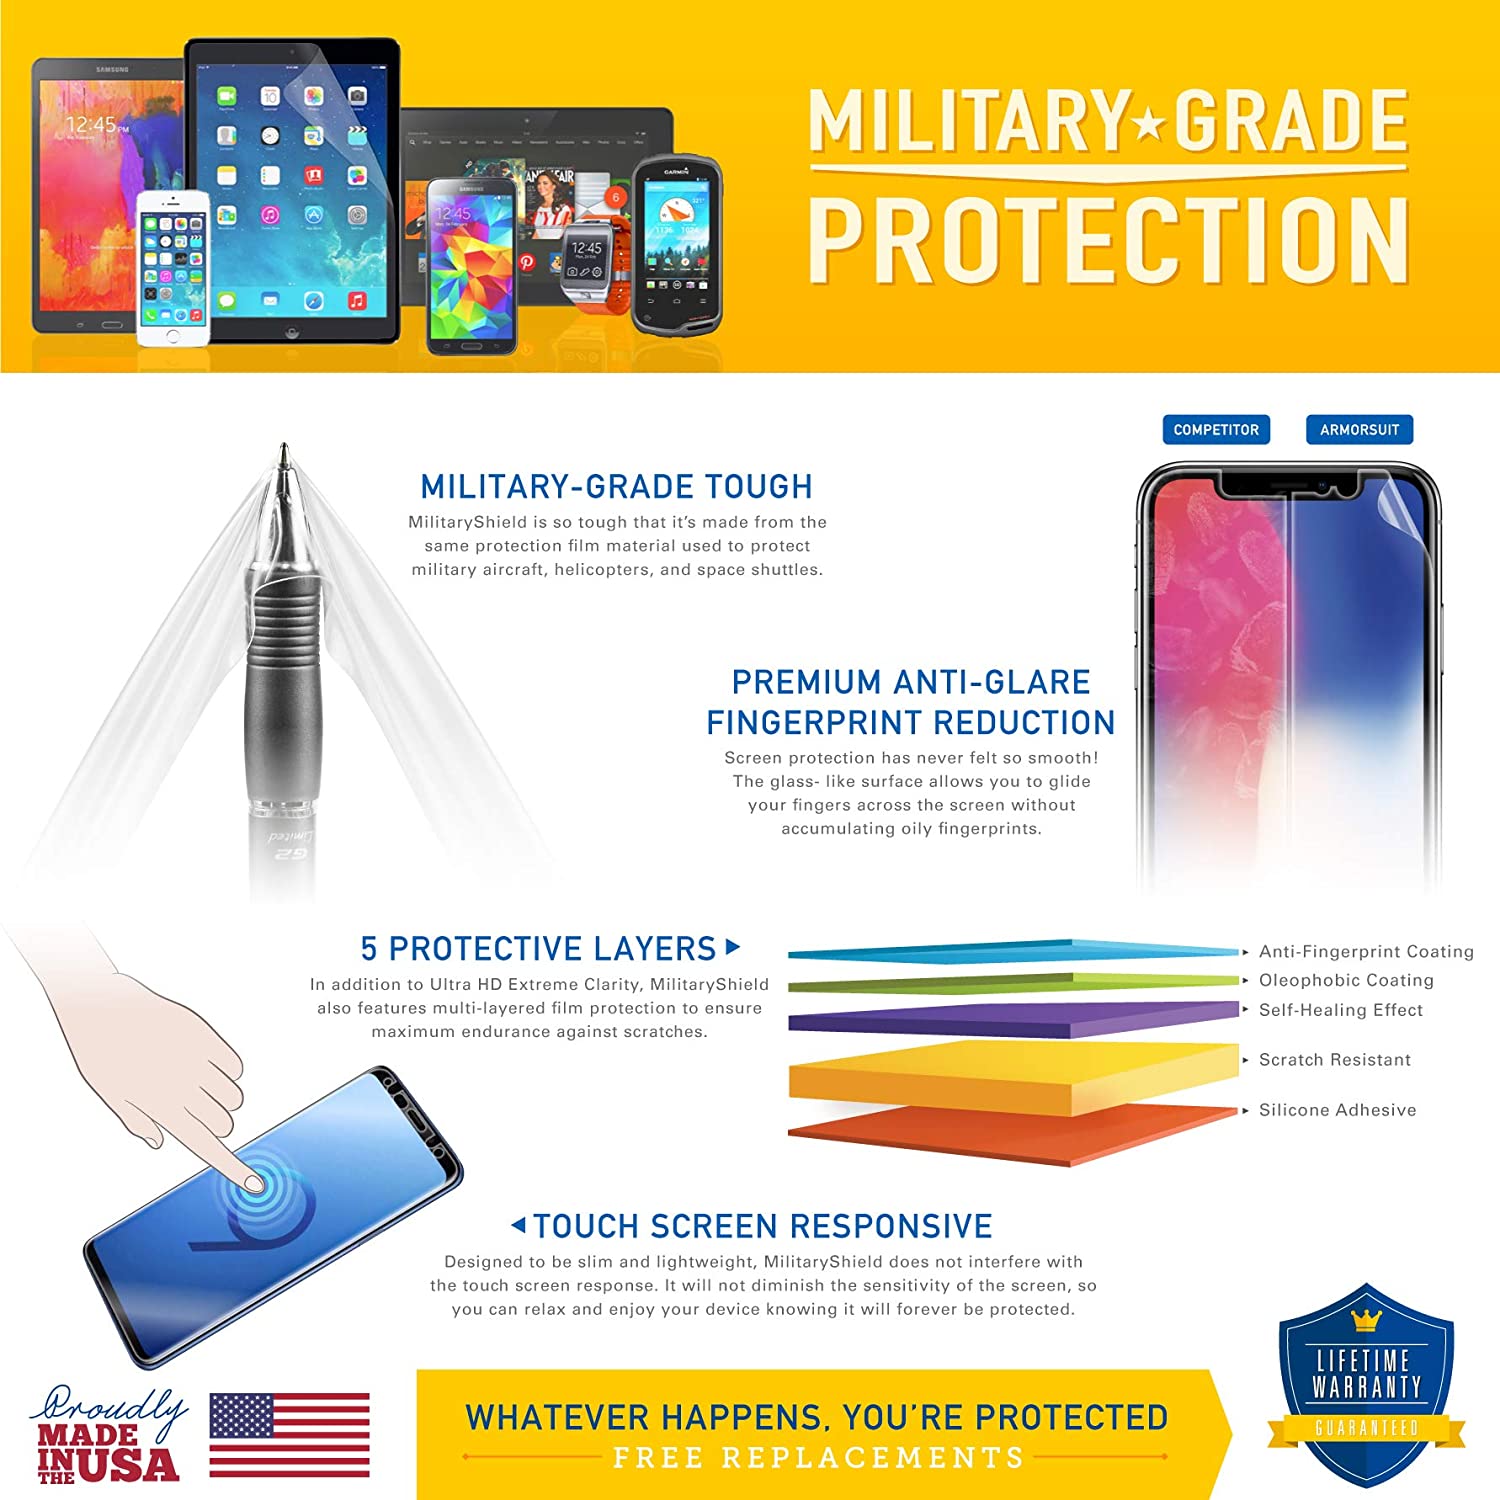 Samsung Galaxy S7 Edge Screen Protector [Full Screen Coverage] + Carbon Fiber Skin